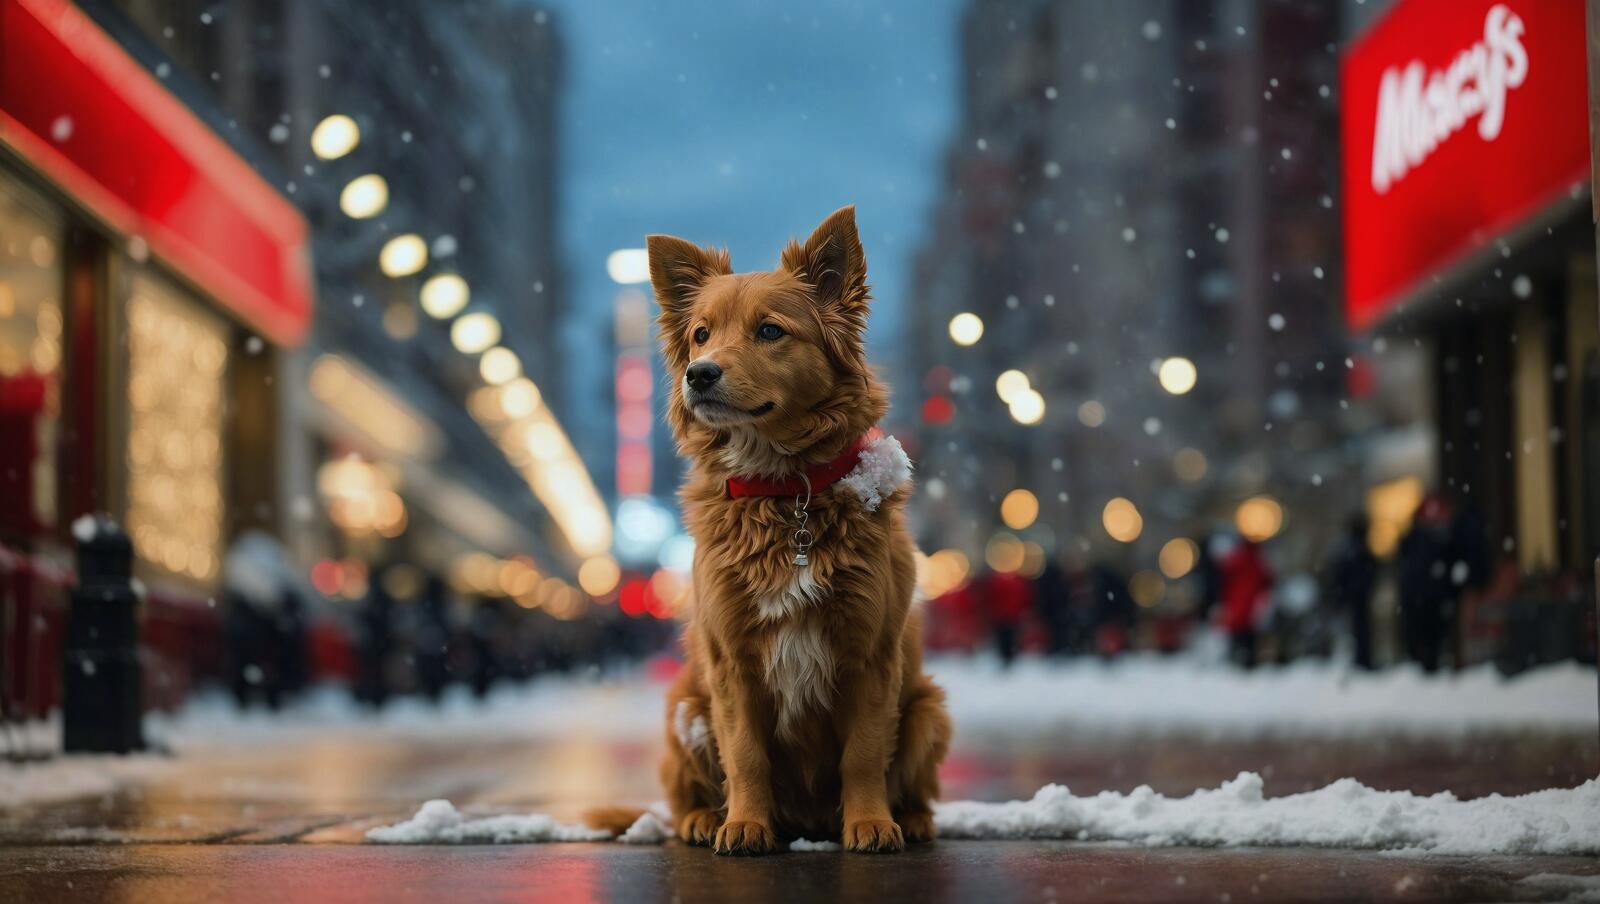 Бесплатное фото На тротуаре в снегу сидит коричневая собака.